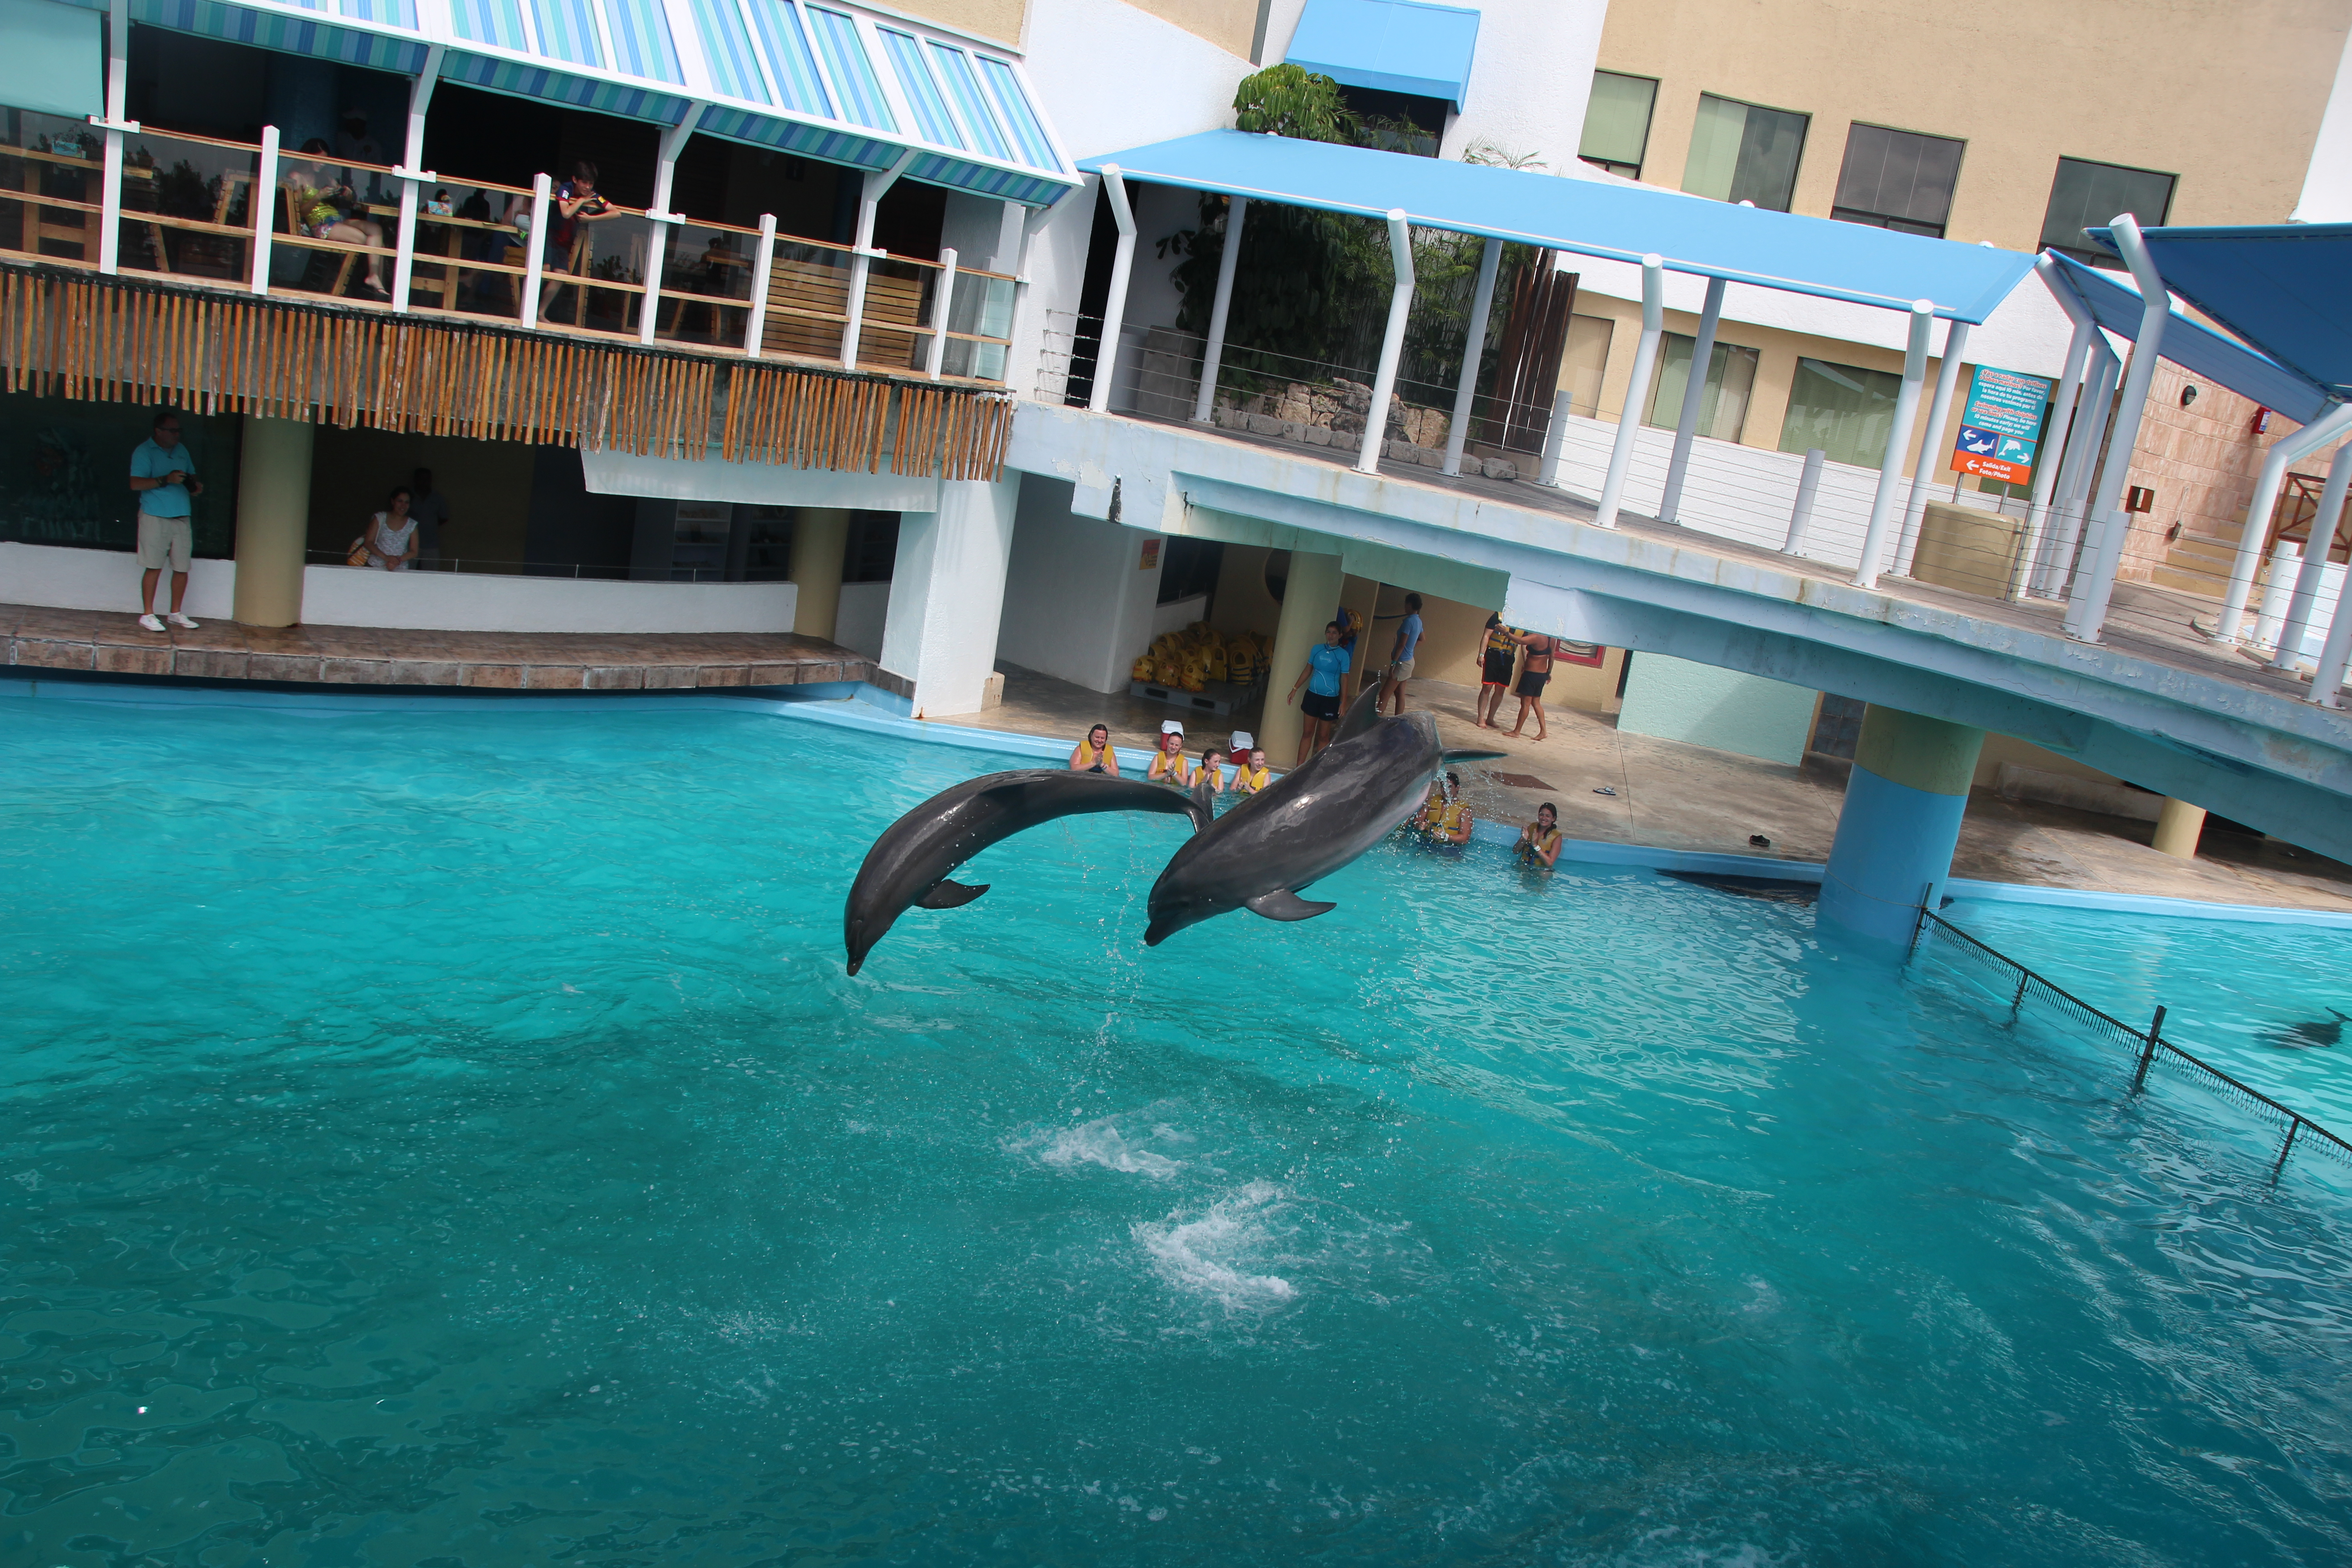 Aquarium inside La Isla Mall - Dolphin show